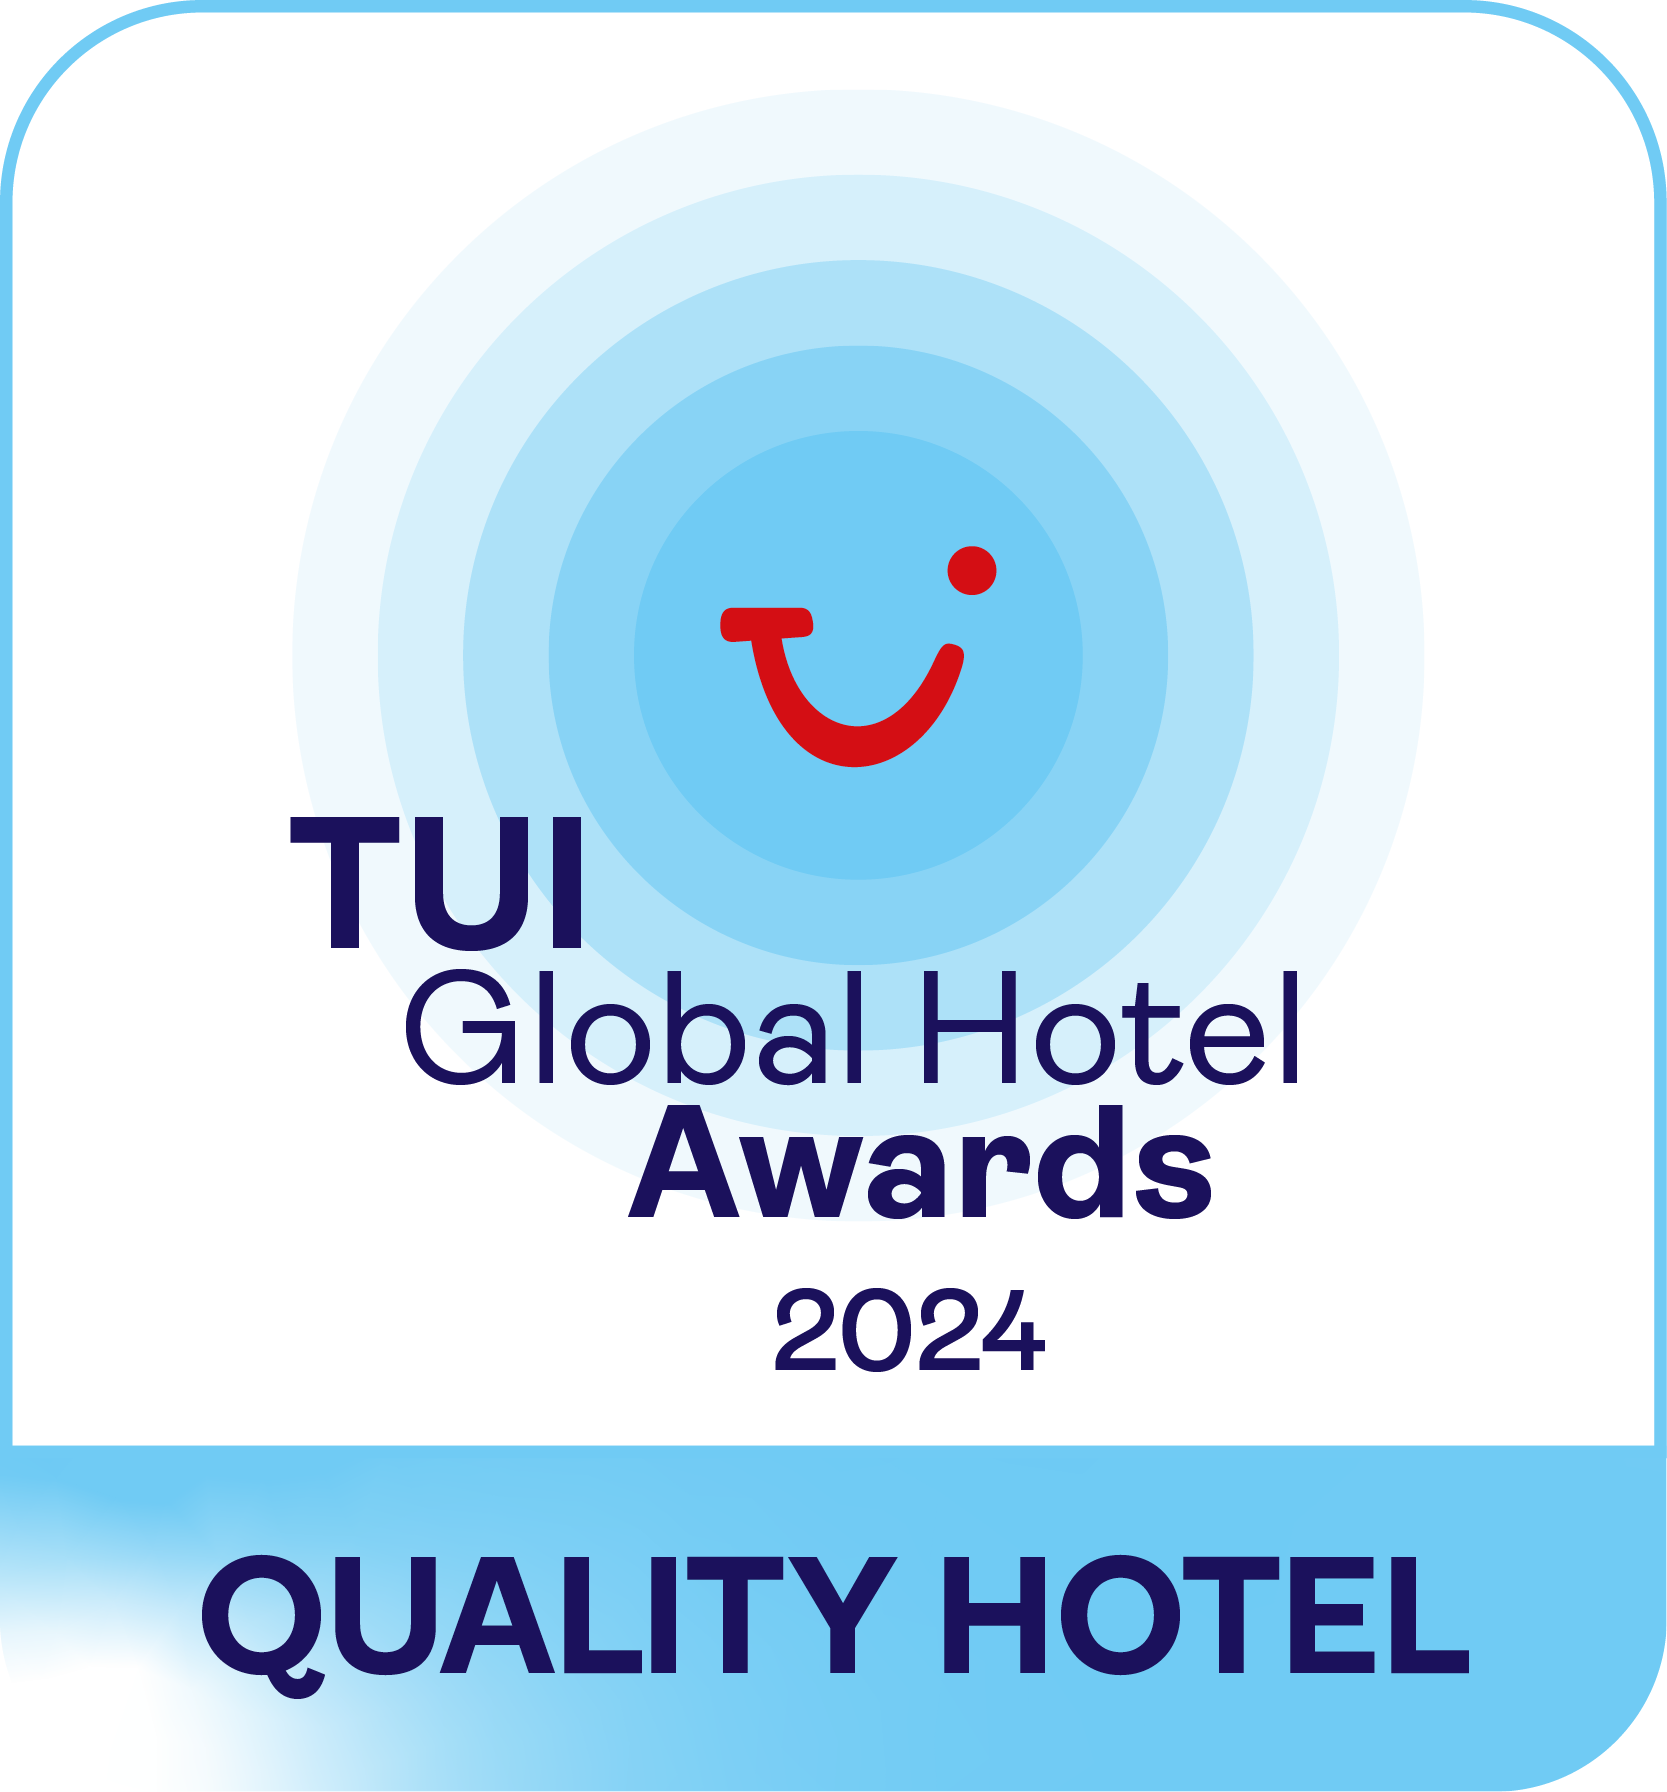 Tui Global Hotel Awards 2024